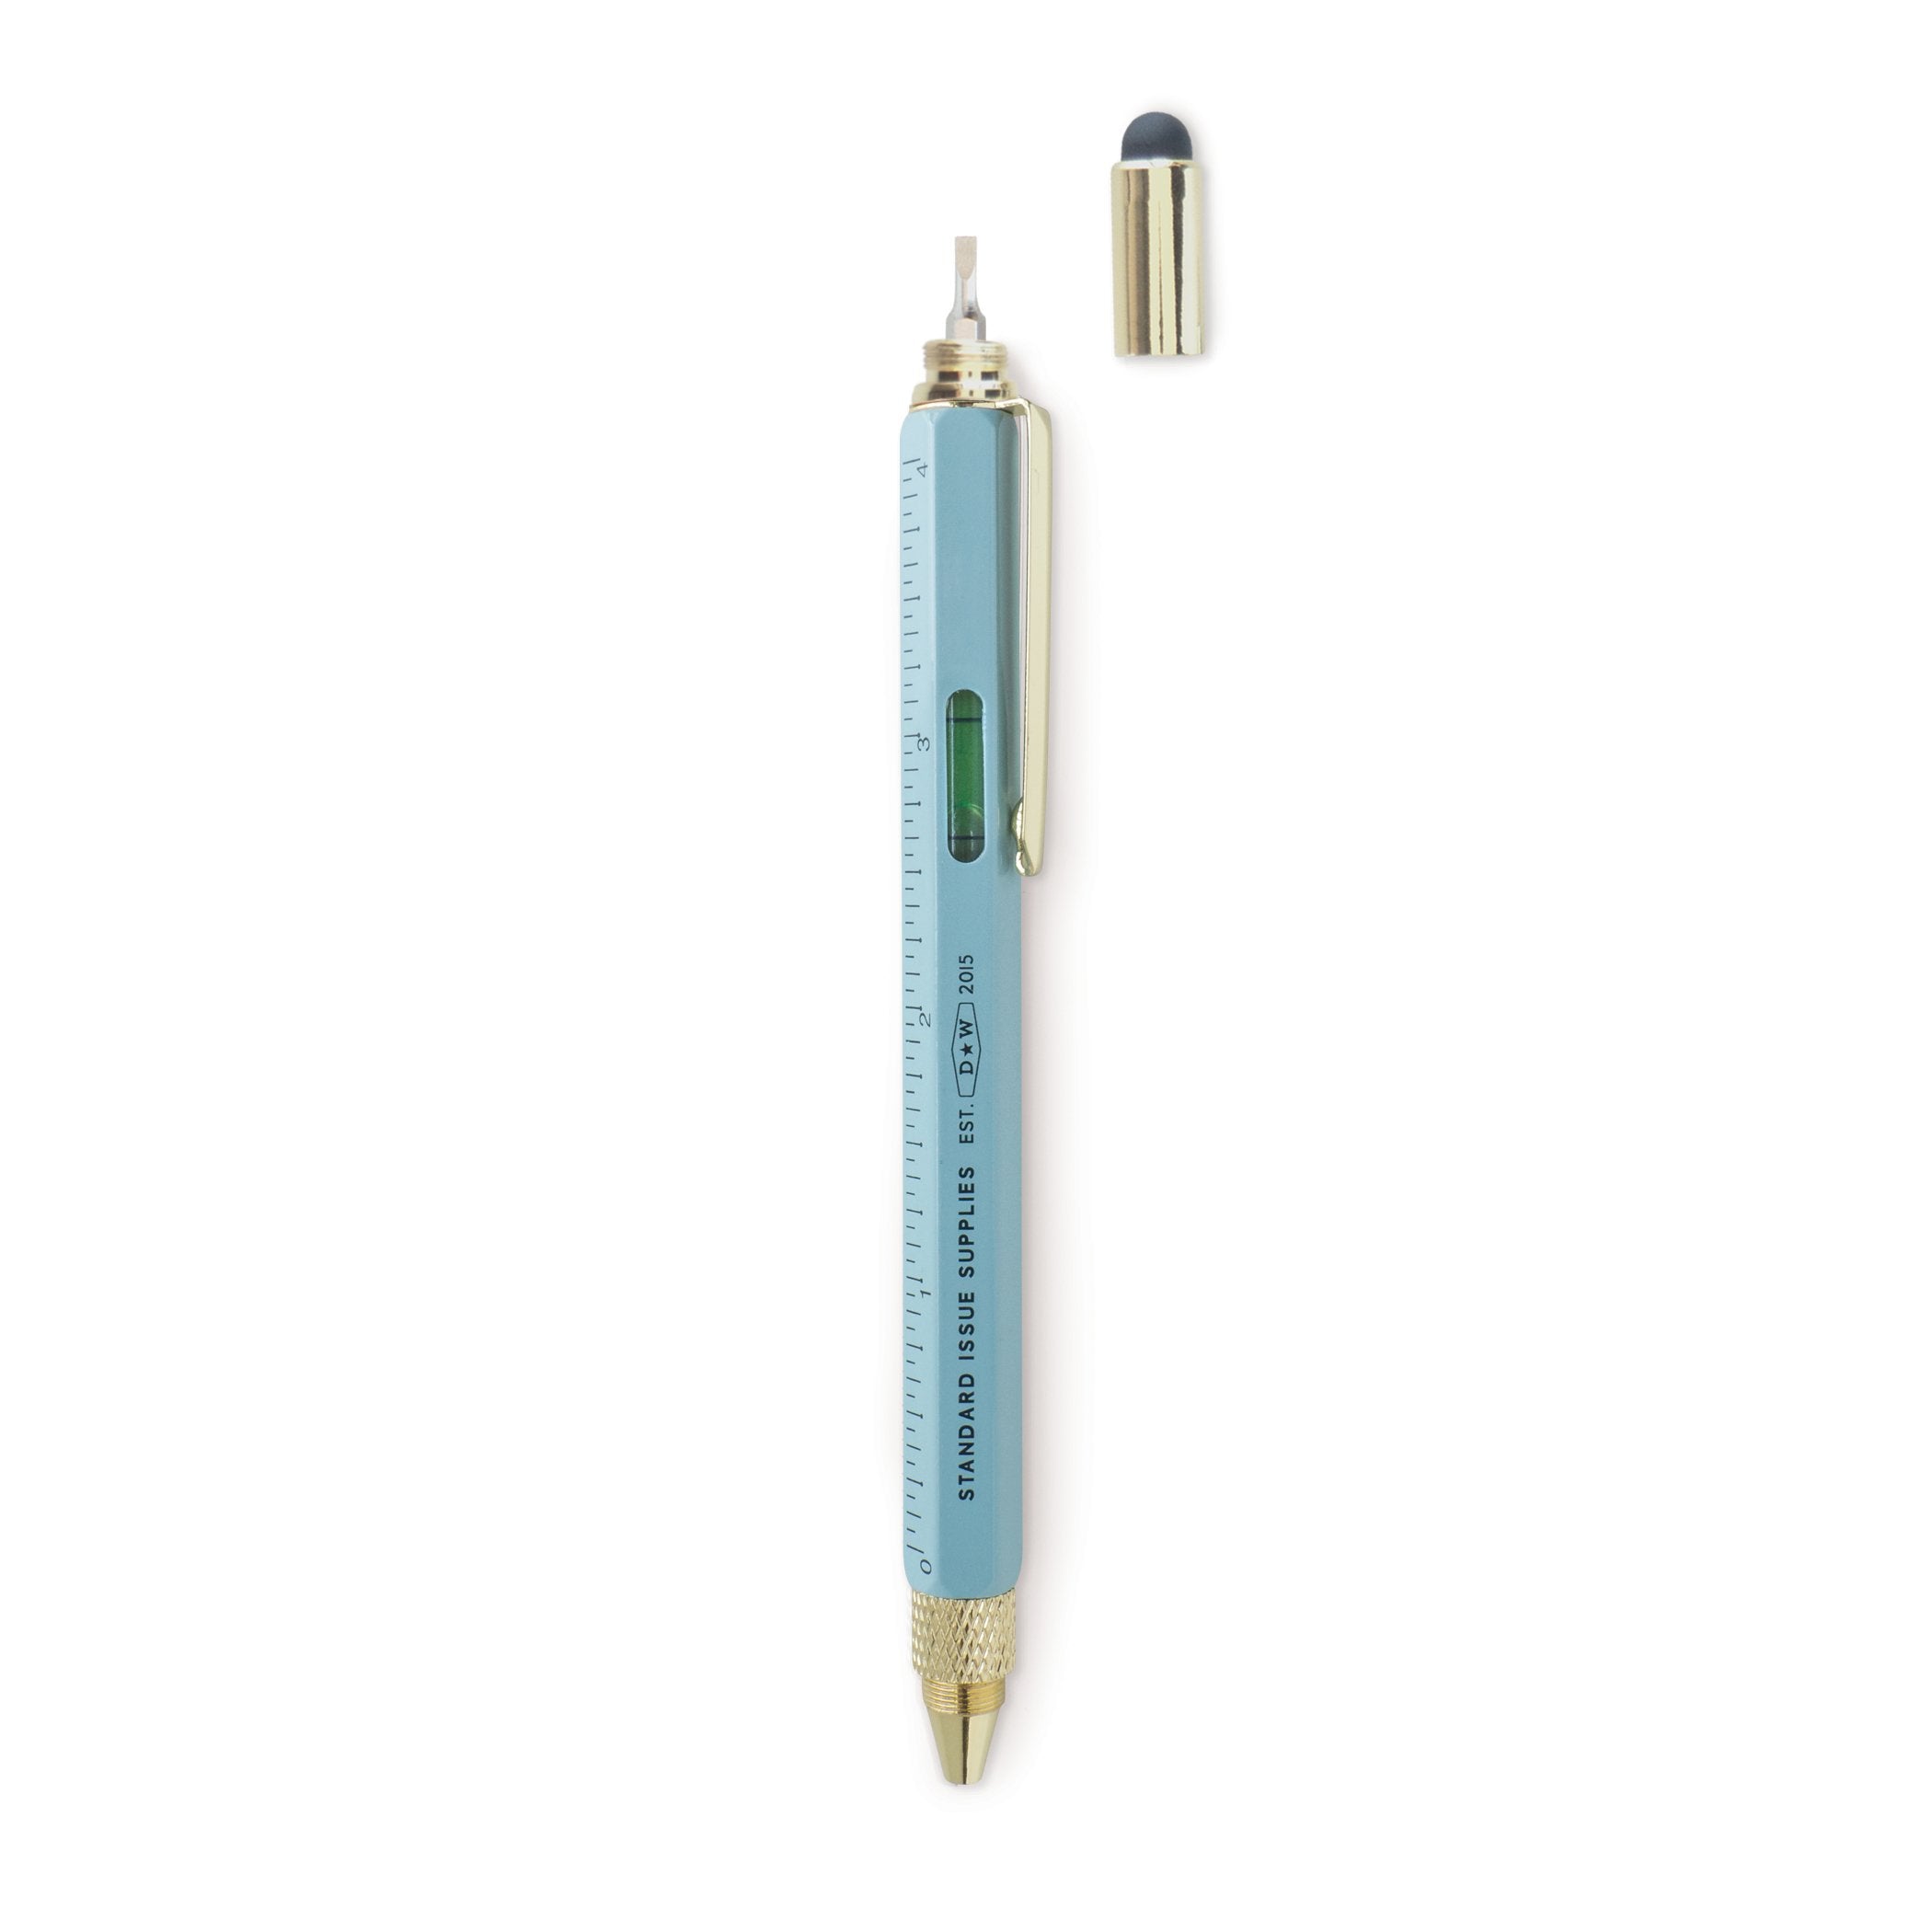 Pix Multi Tool - Standard Issue Tool Pen - Blue | DesignWorks Ink image3